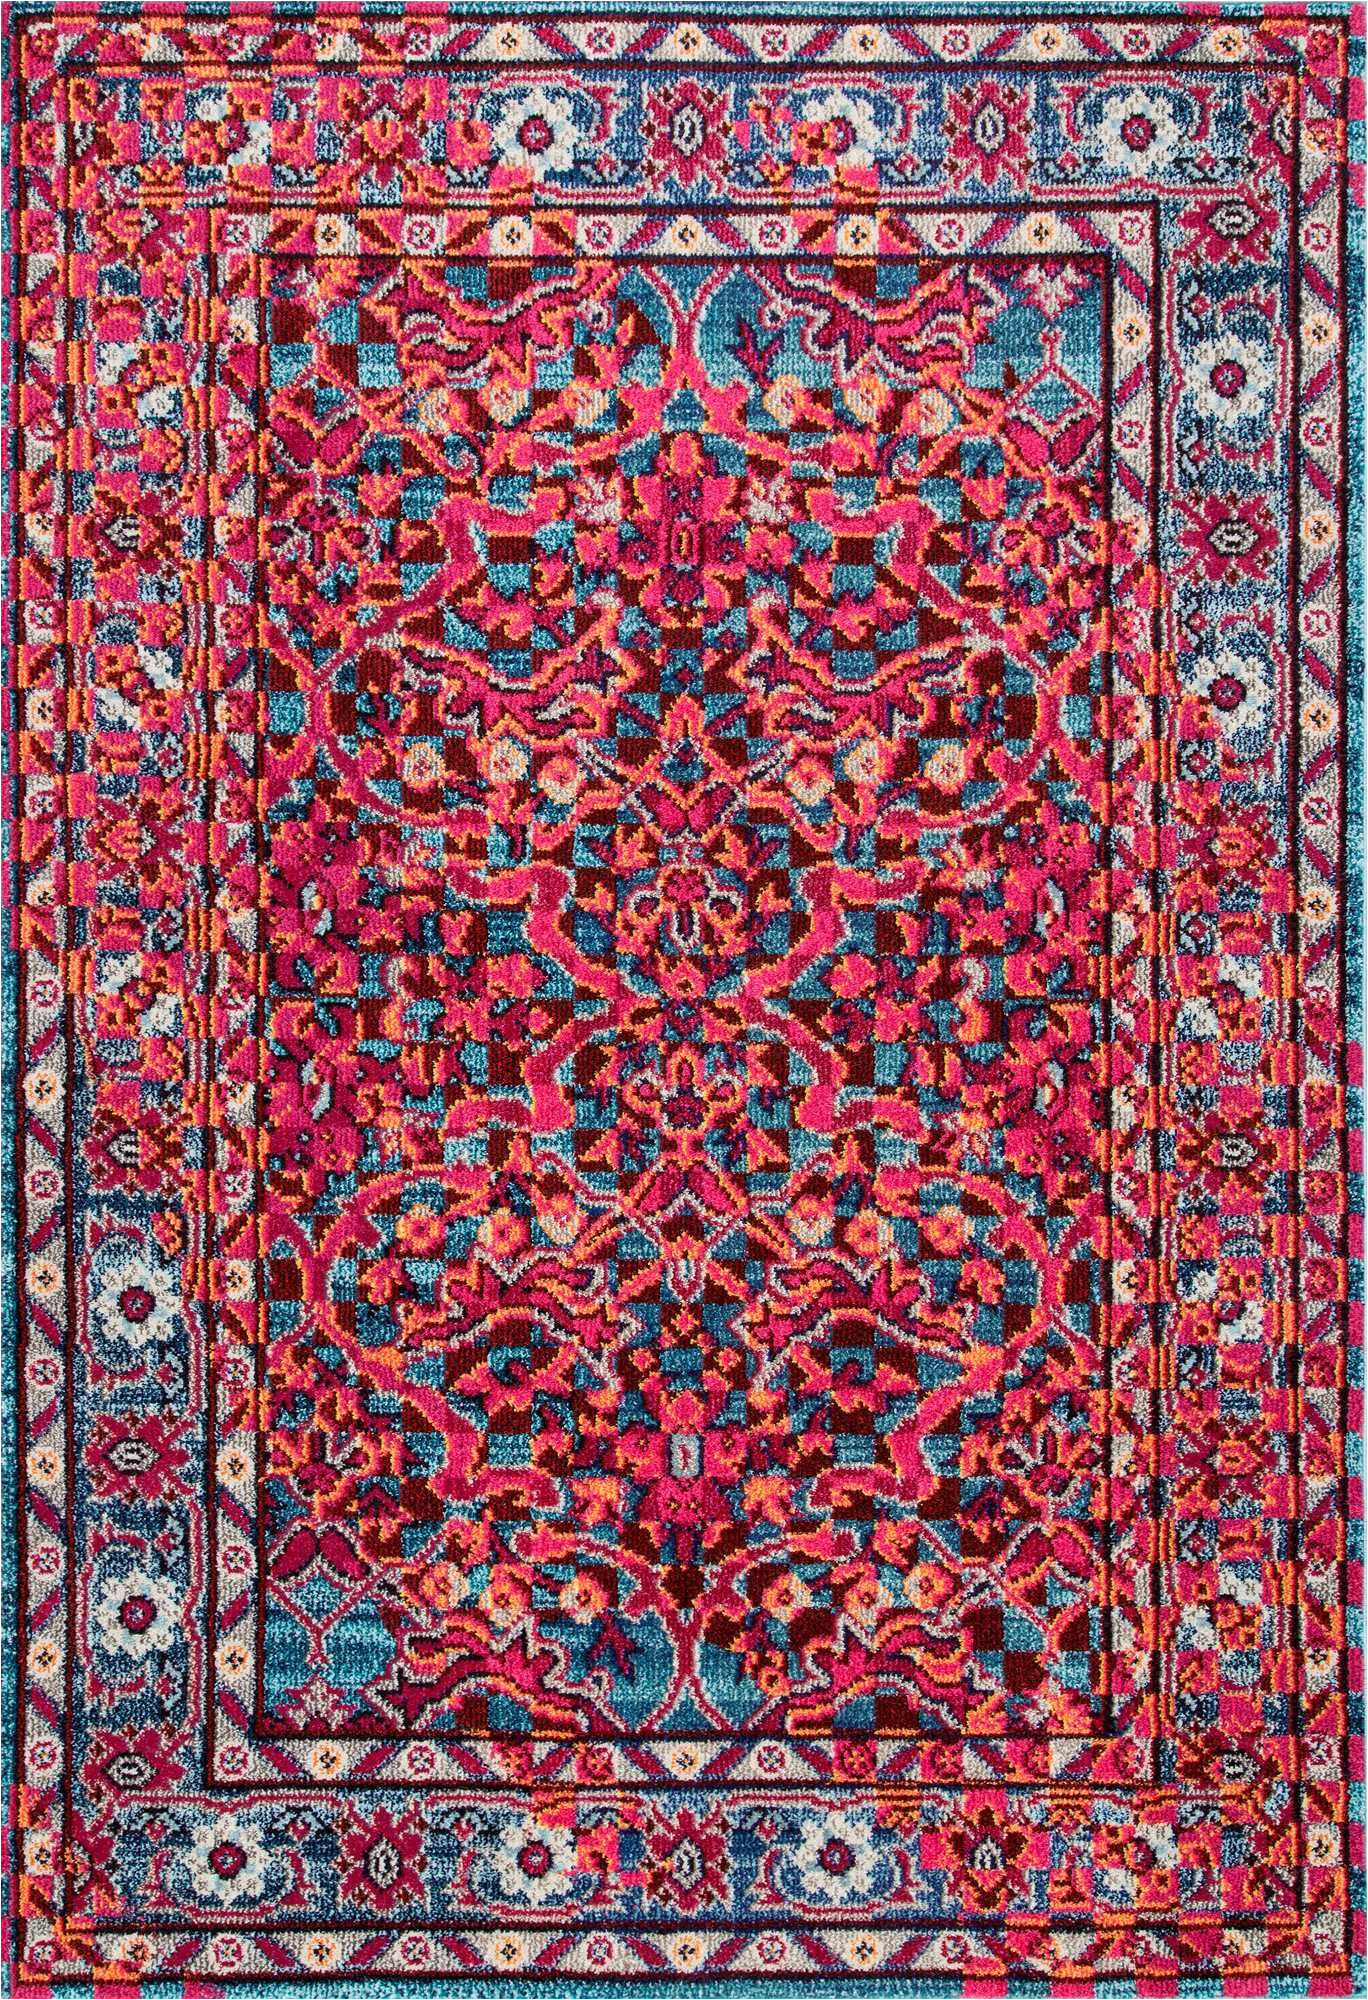 this is rugs usa s chroma janus dual dappled damask cb25 rug